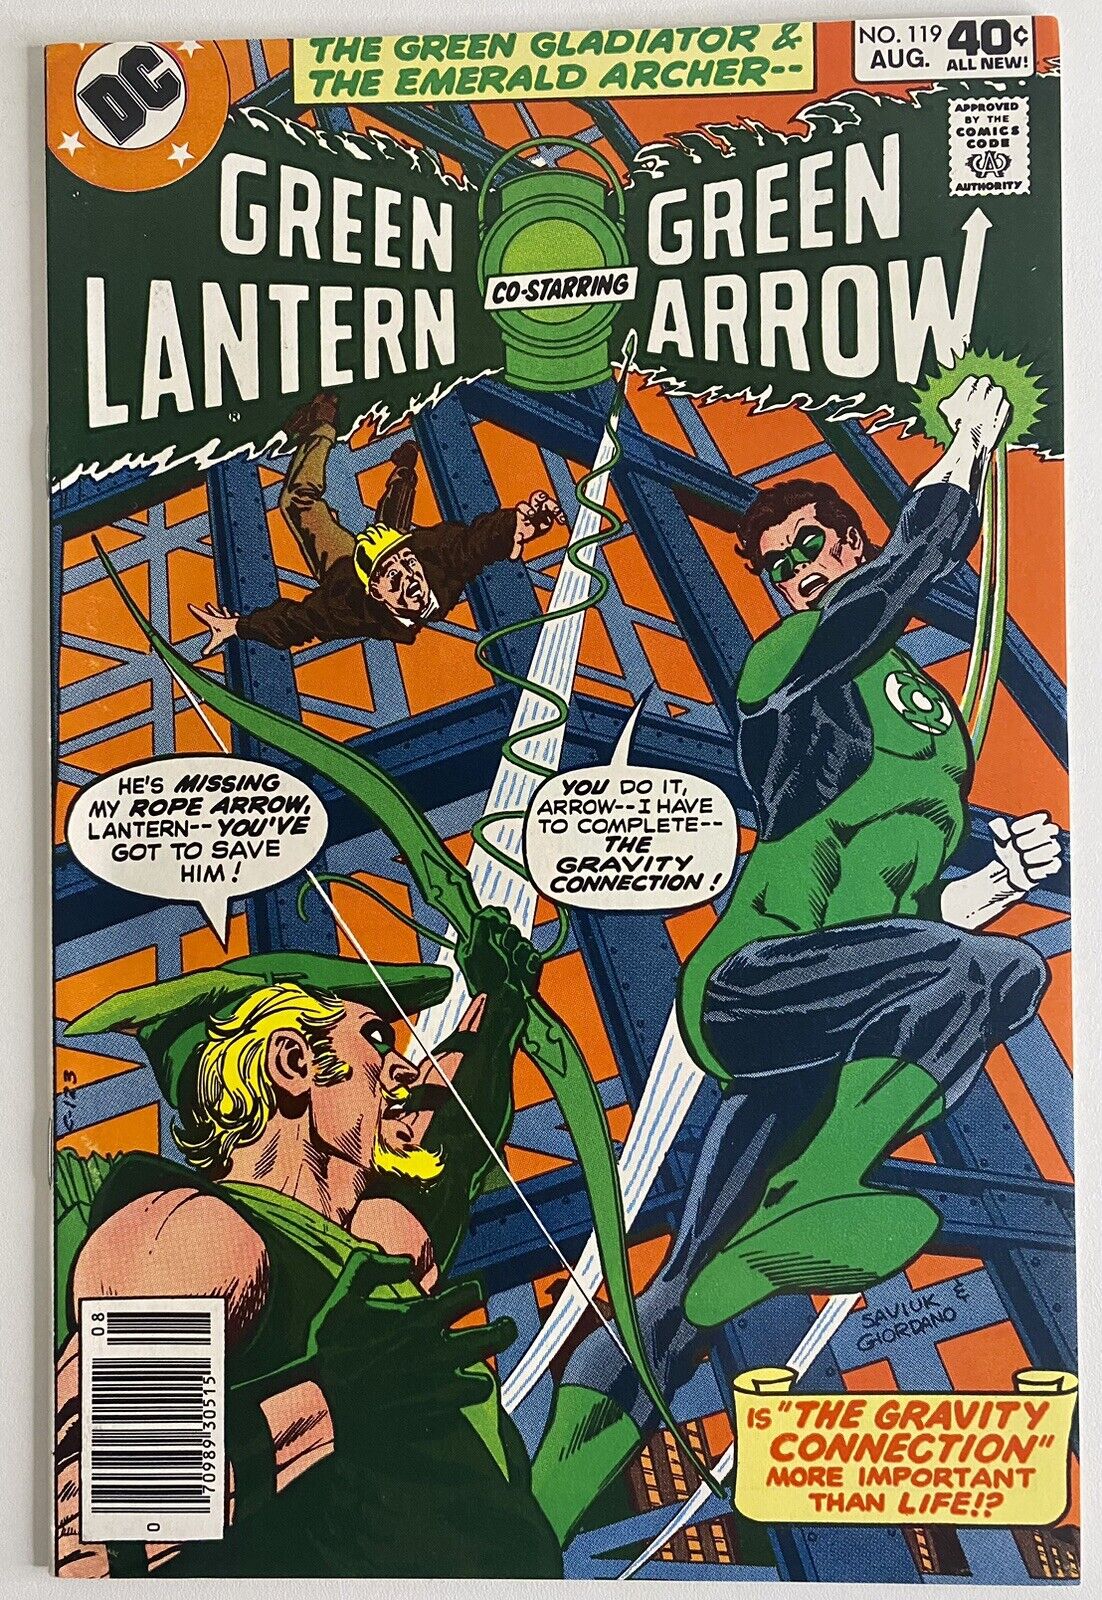 Green Lantern Co-Starring Green Arrow #119, DC, High Grade One Owner